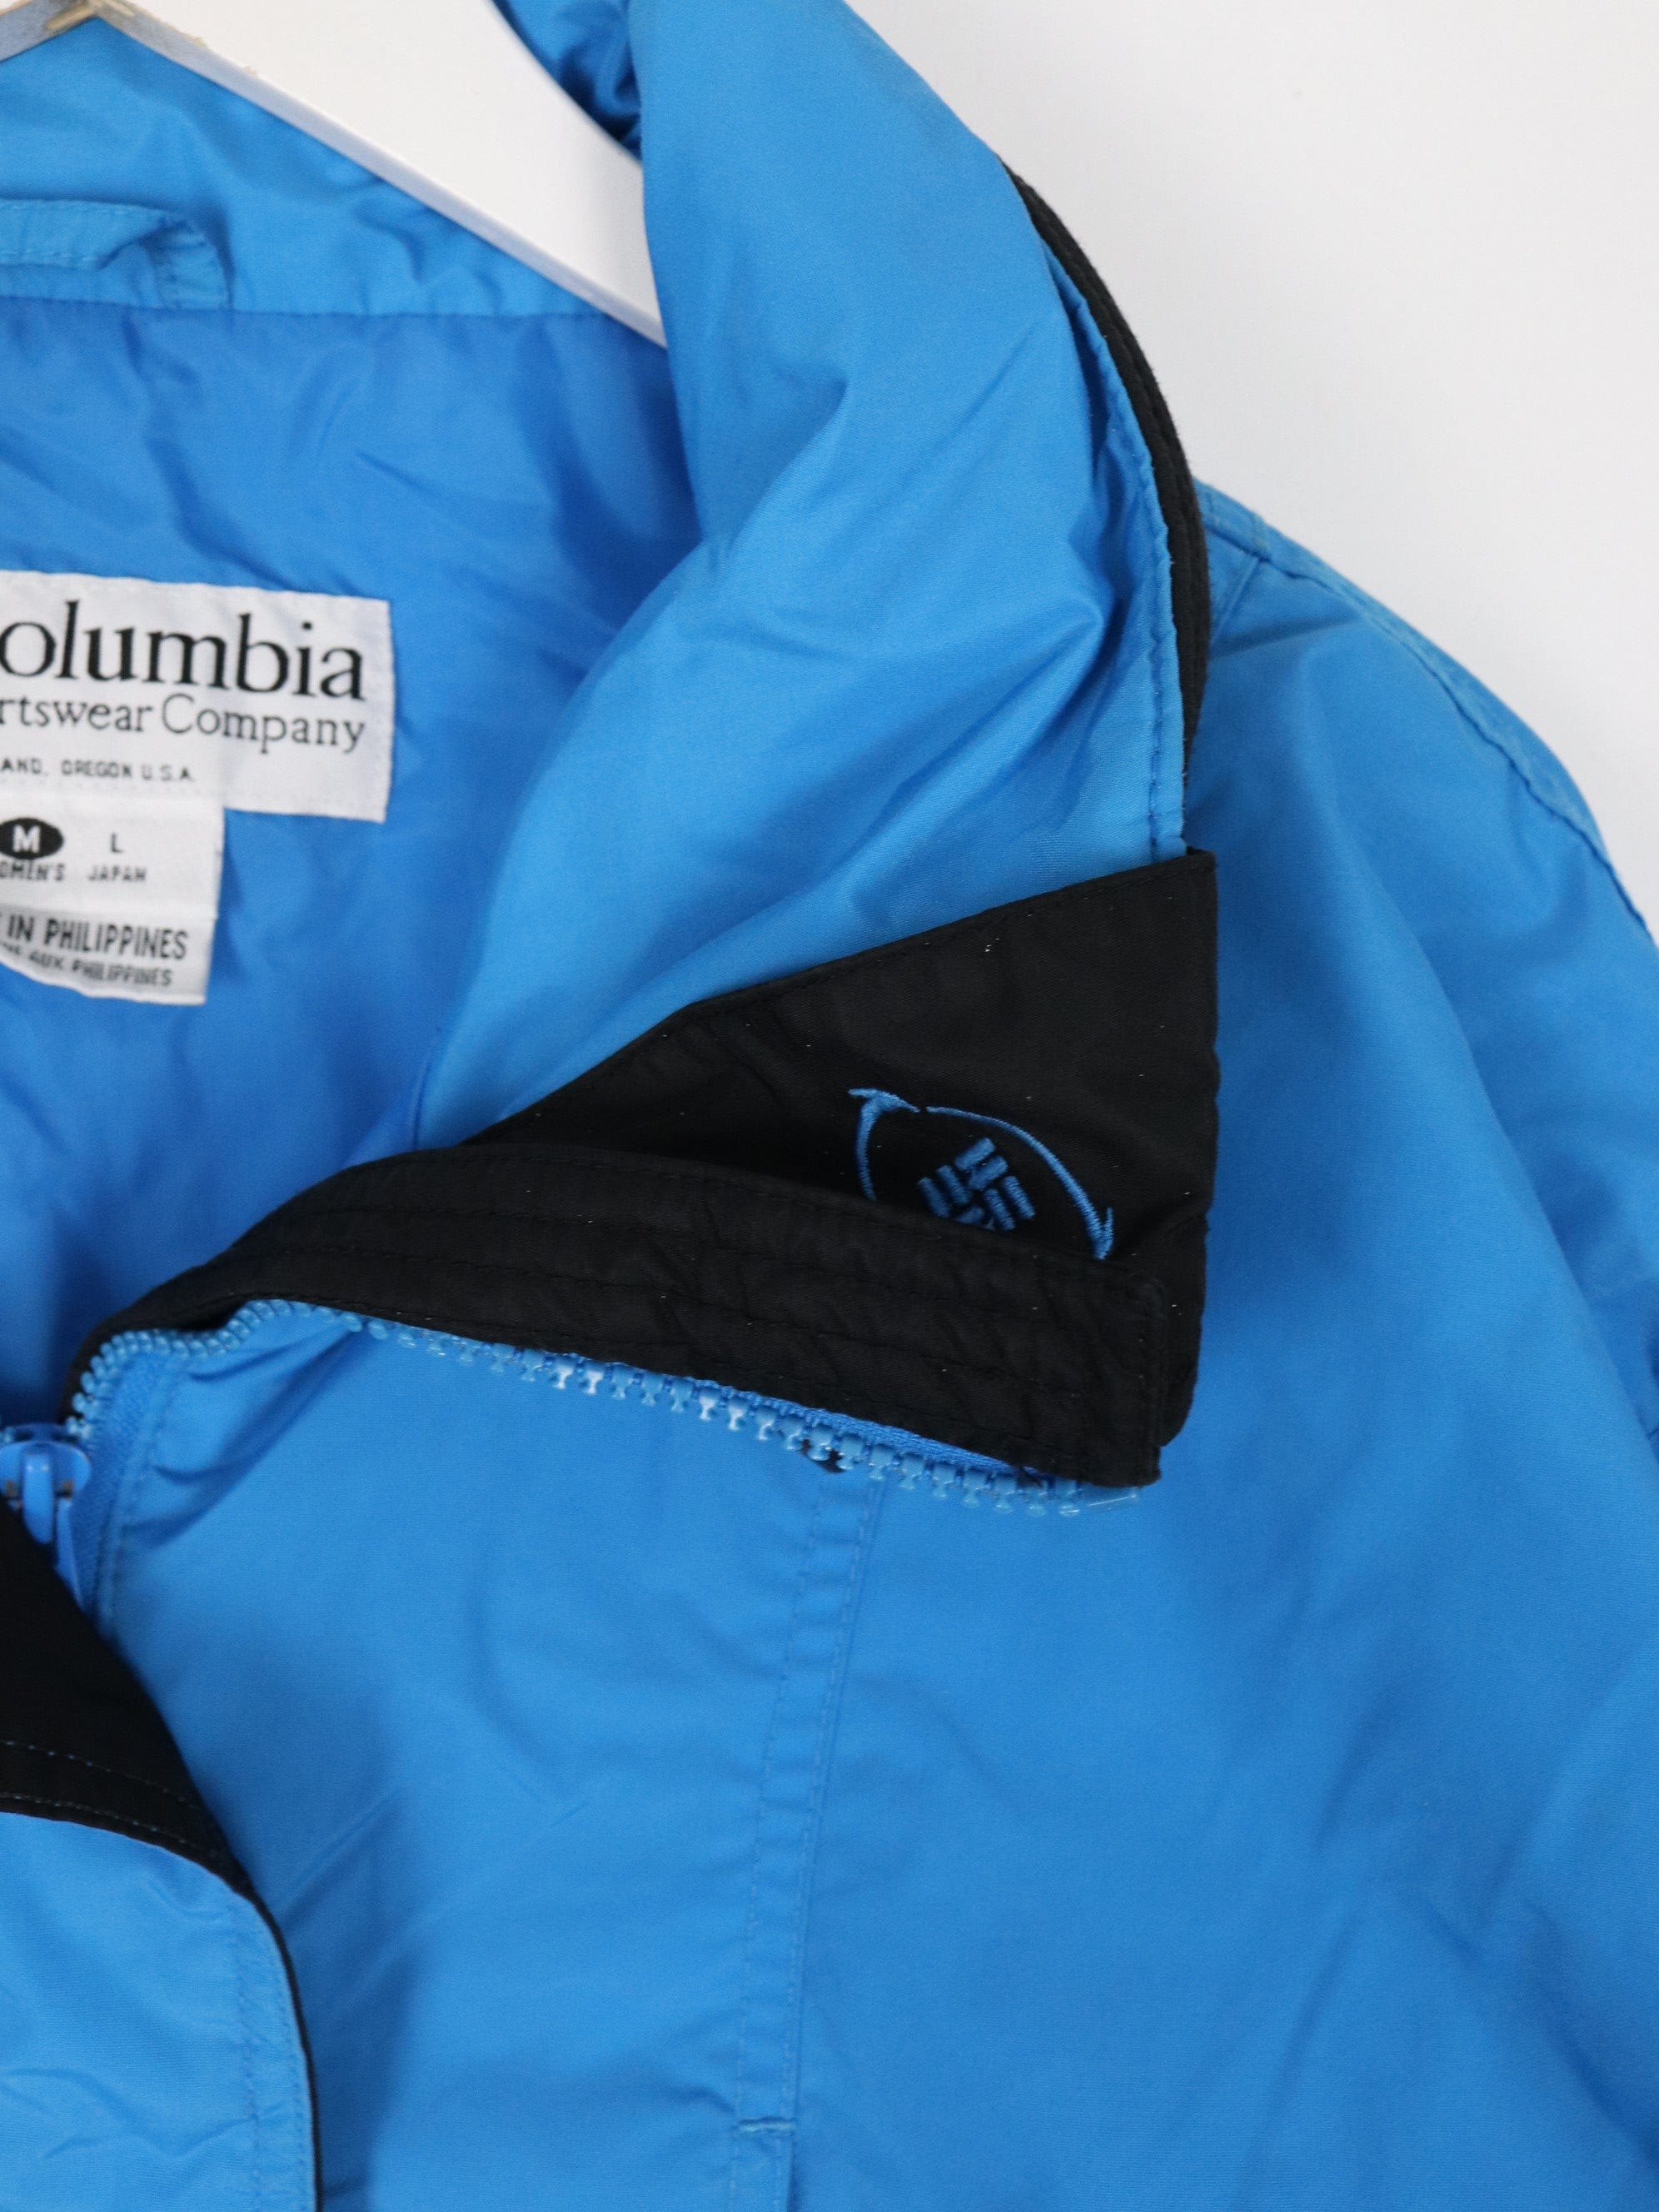 Columbia Jacket Womens Medium Blue Long's Peak Ski Coat – Proper